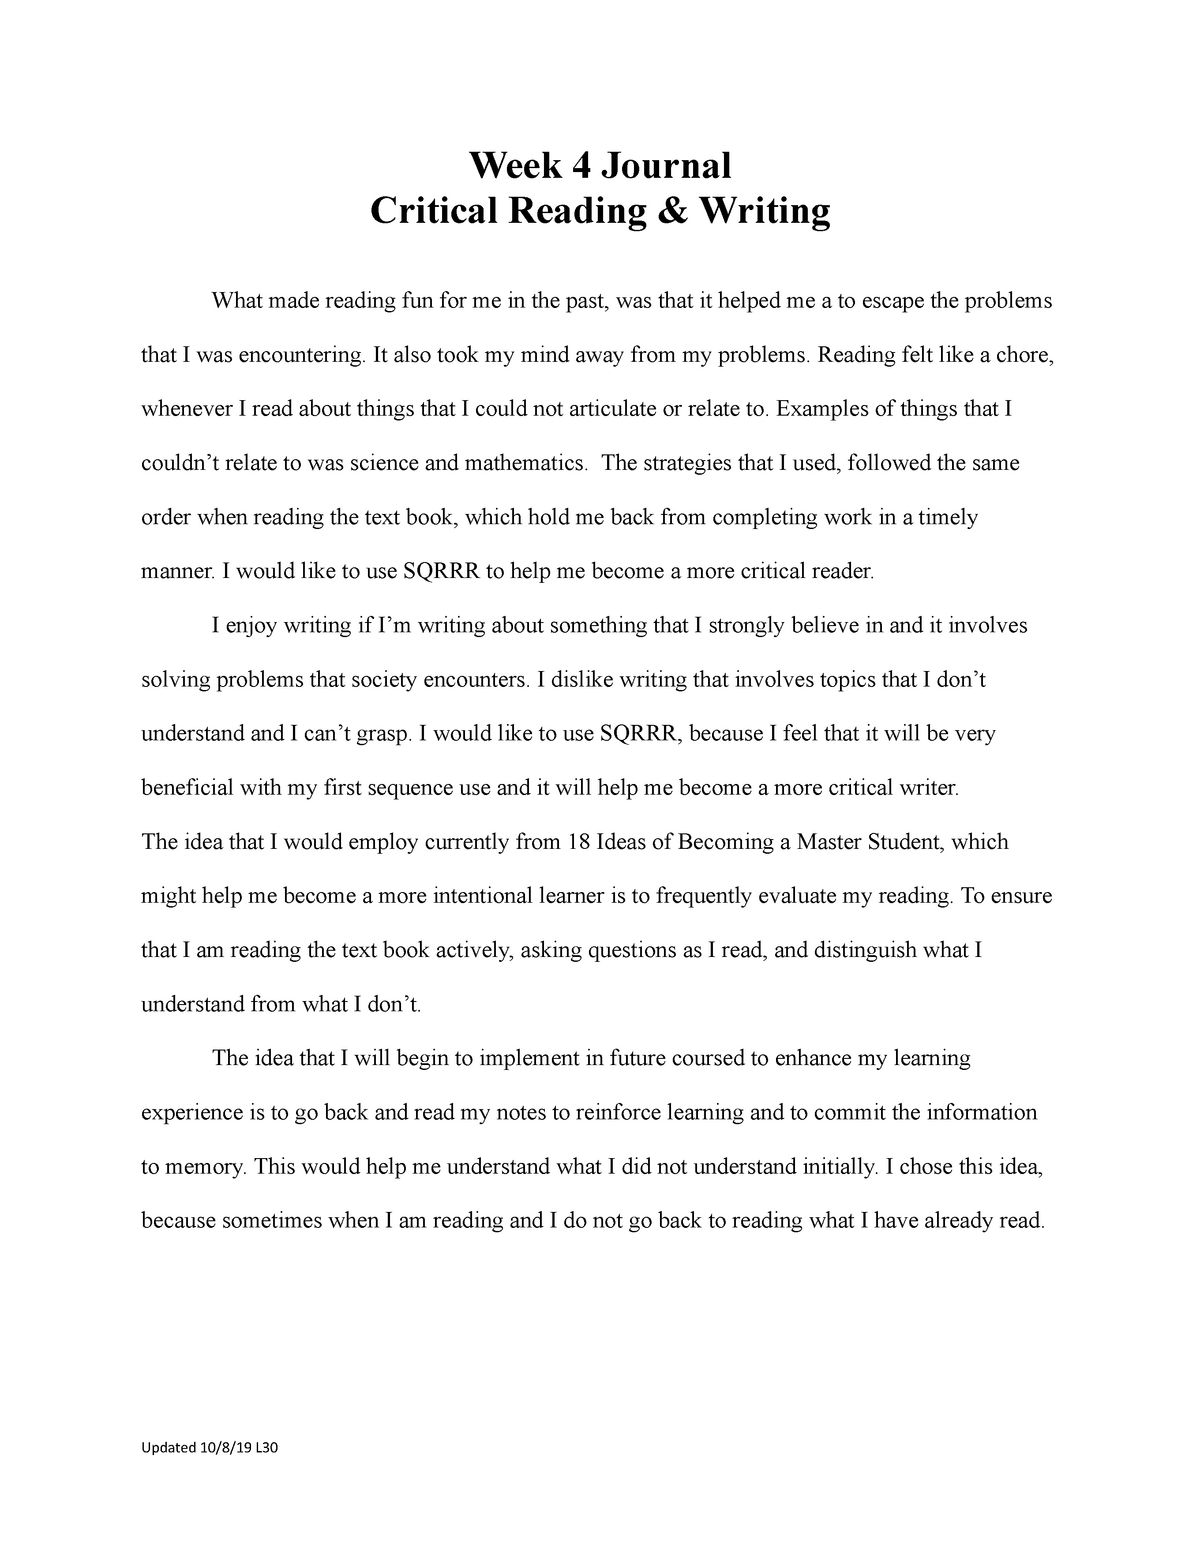 week-4-journal-critical-reading-and-writing-week-4-journal-critical